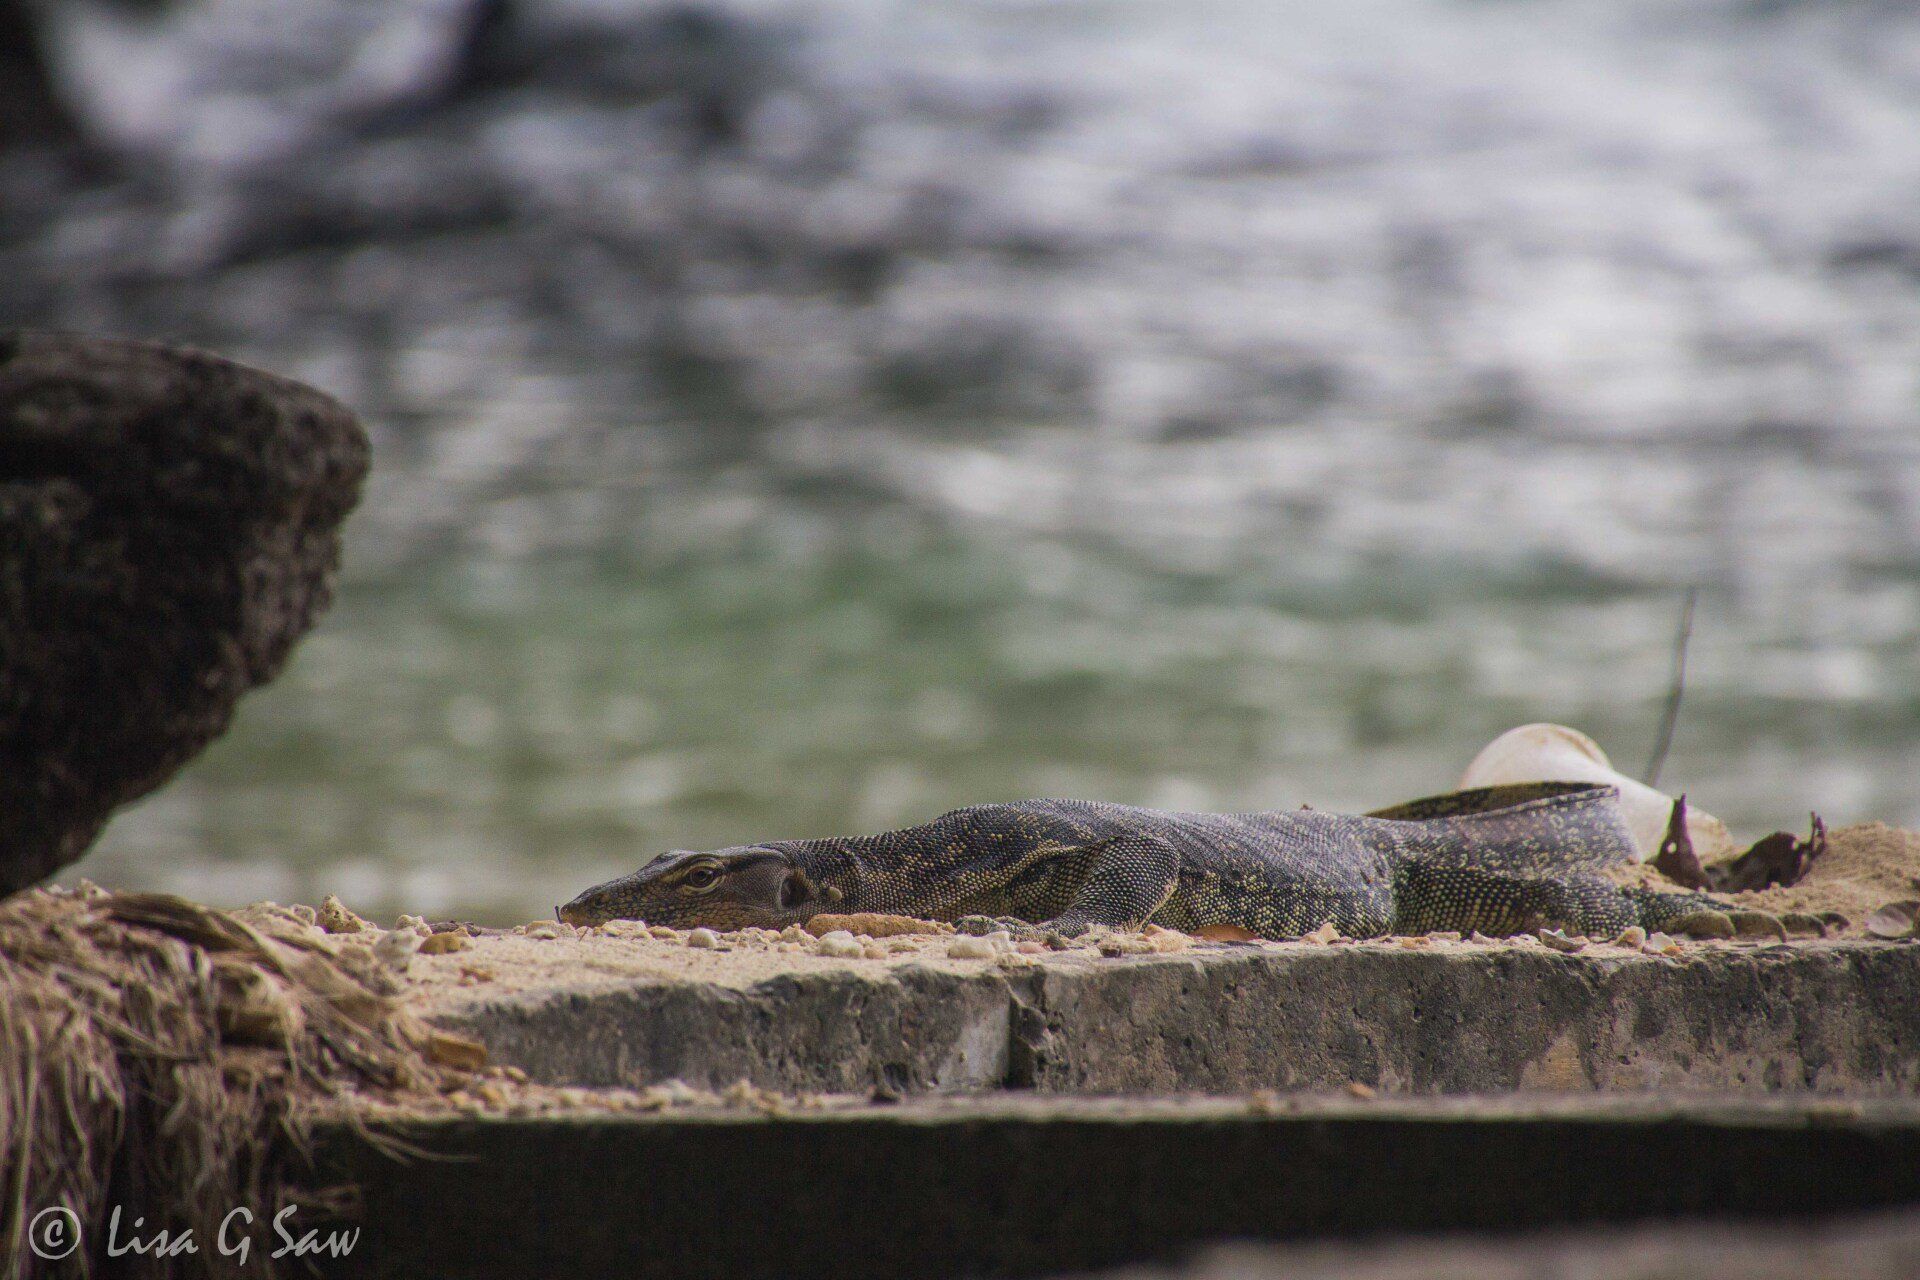 Large monitor lizard on beach, Manukan Island